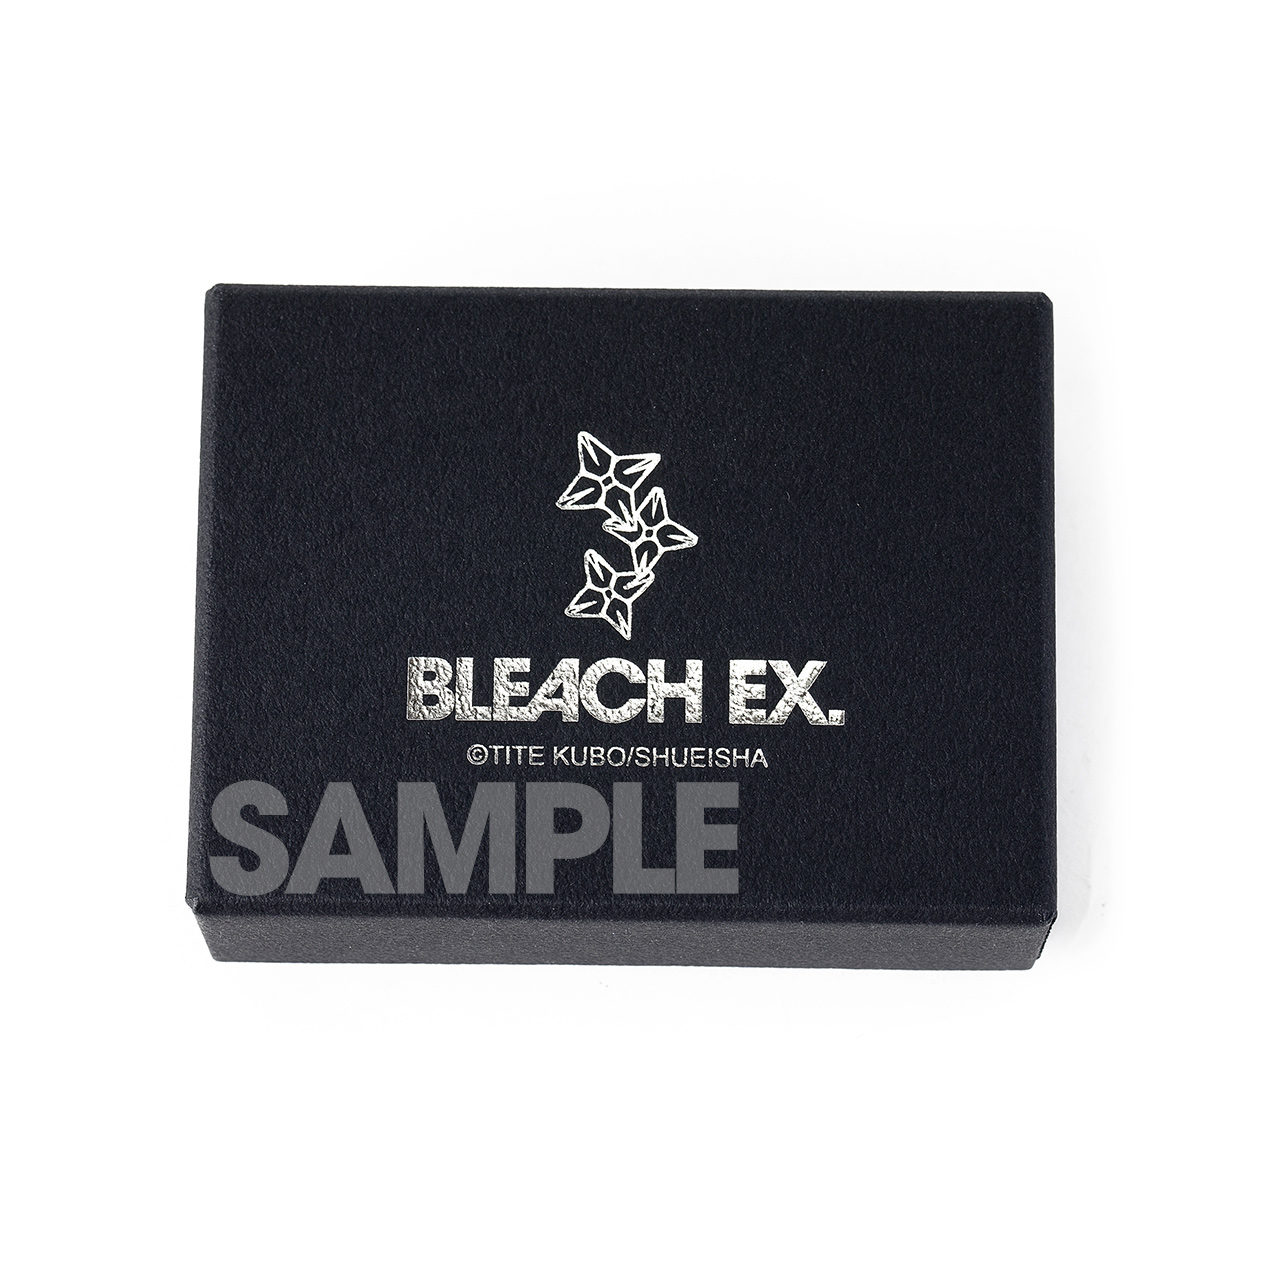 BLEACH EX. / オリジナルイヤリング